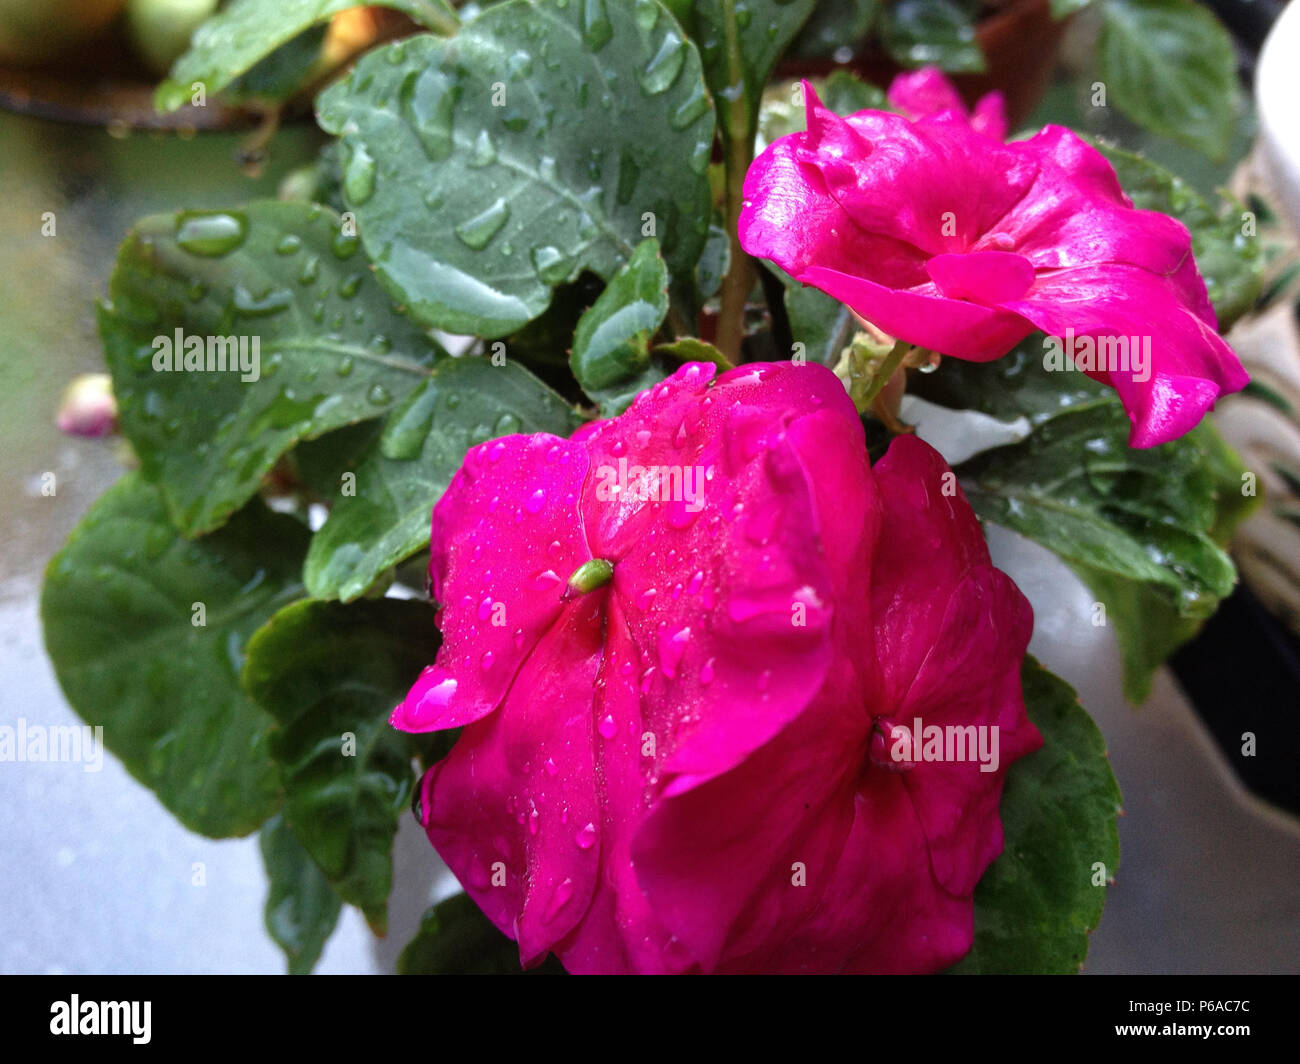 Close-up of magenta Impatiens flowers Stock Photo